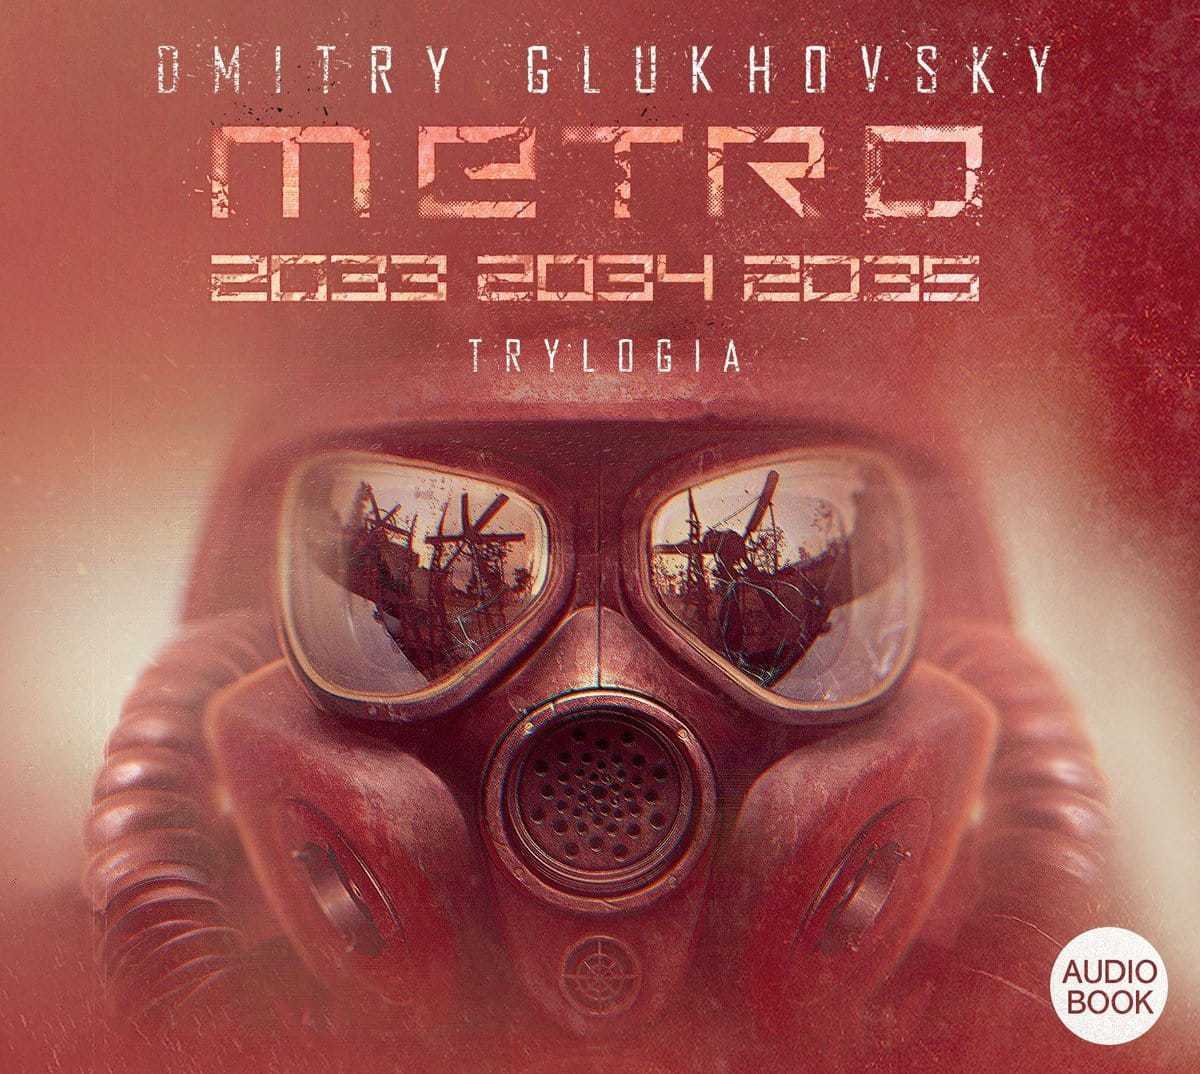 Metro 2033 Audiobook Free Download and Listen